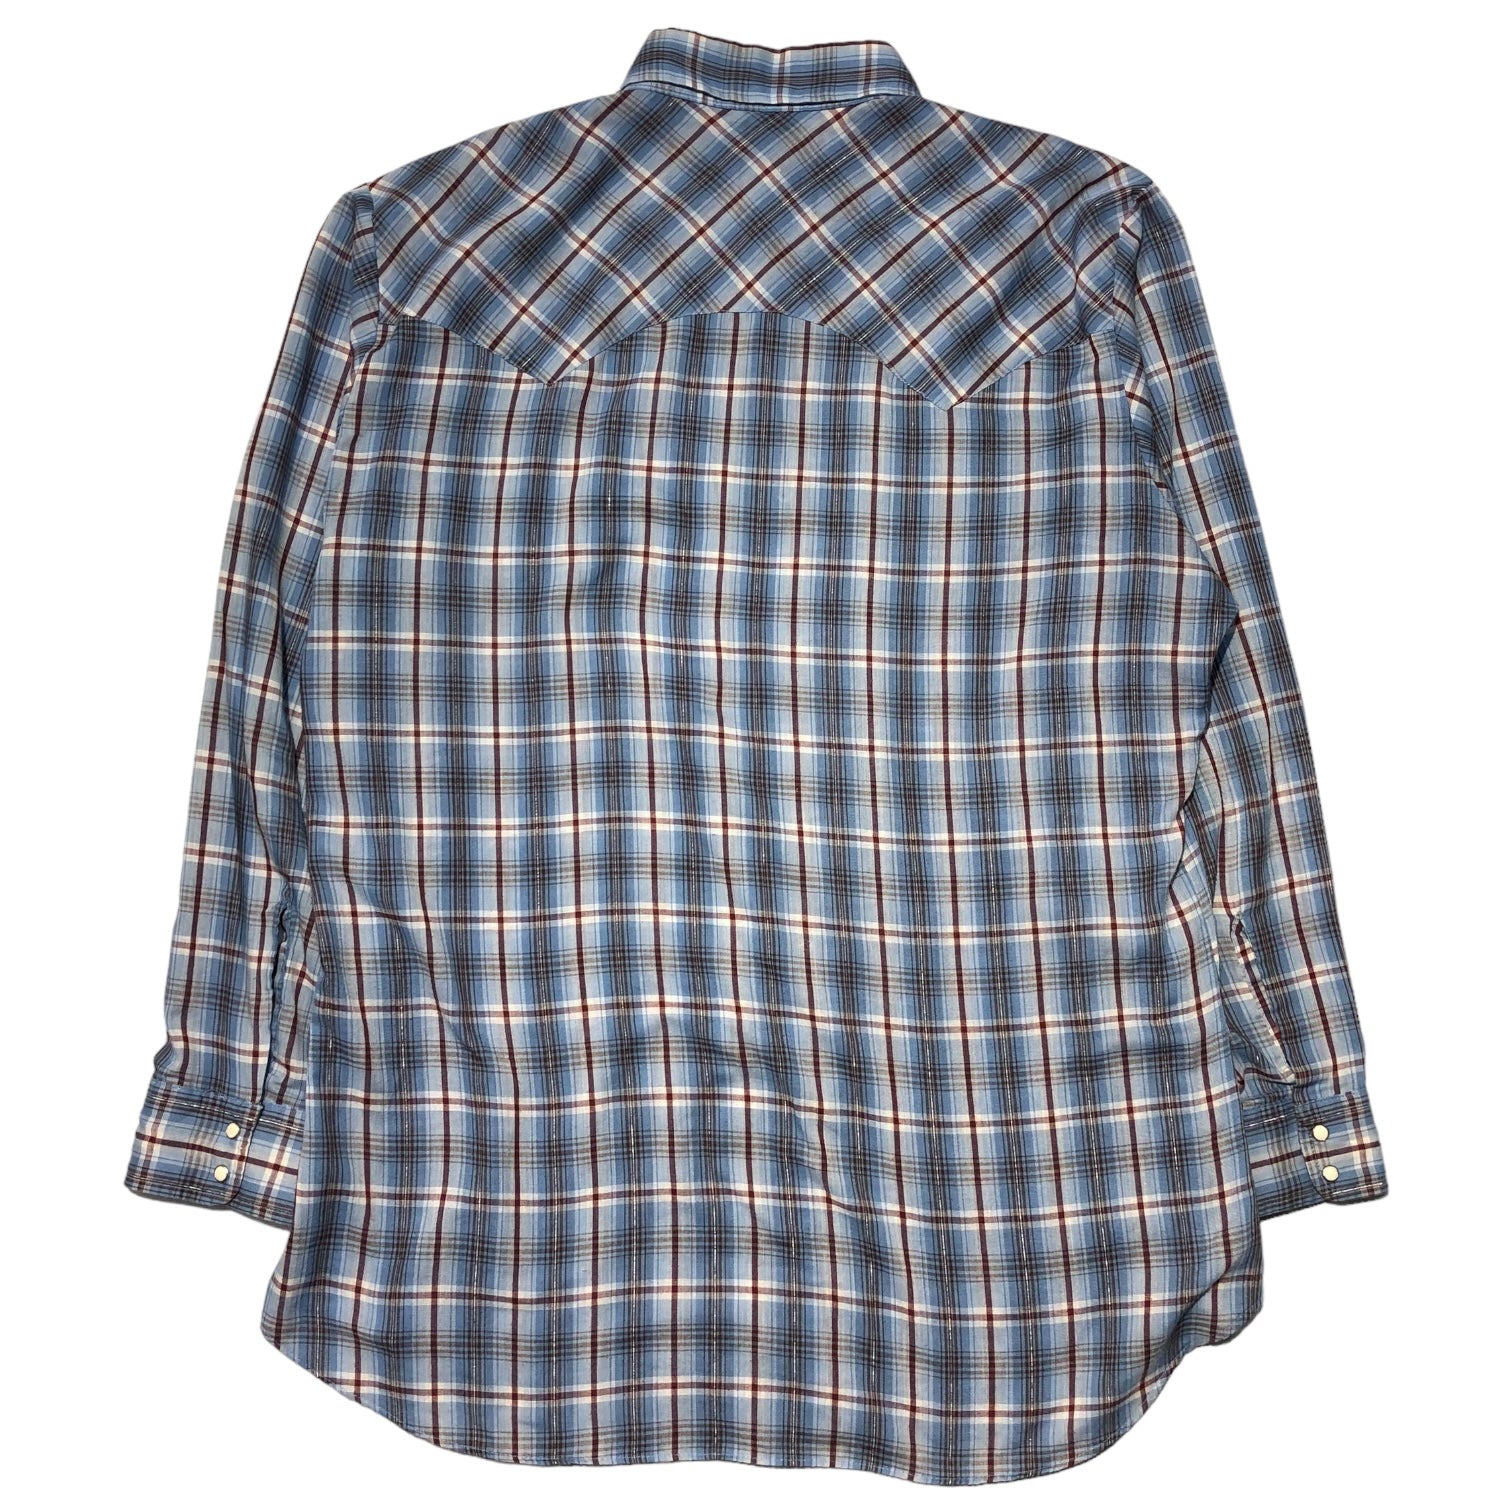 Levi's(リーバイス) 70’s western check shirt ウエスタン チェック シャツ 60648-2319 XL スカイブルー ヴィンテージ 70年代